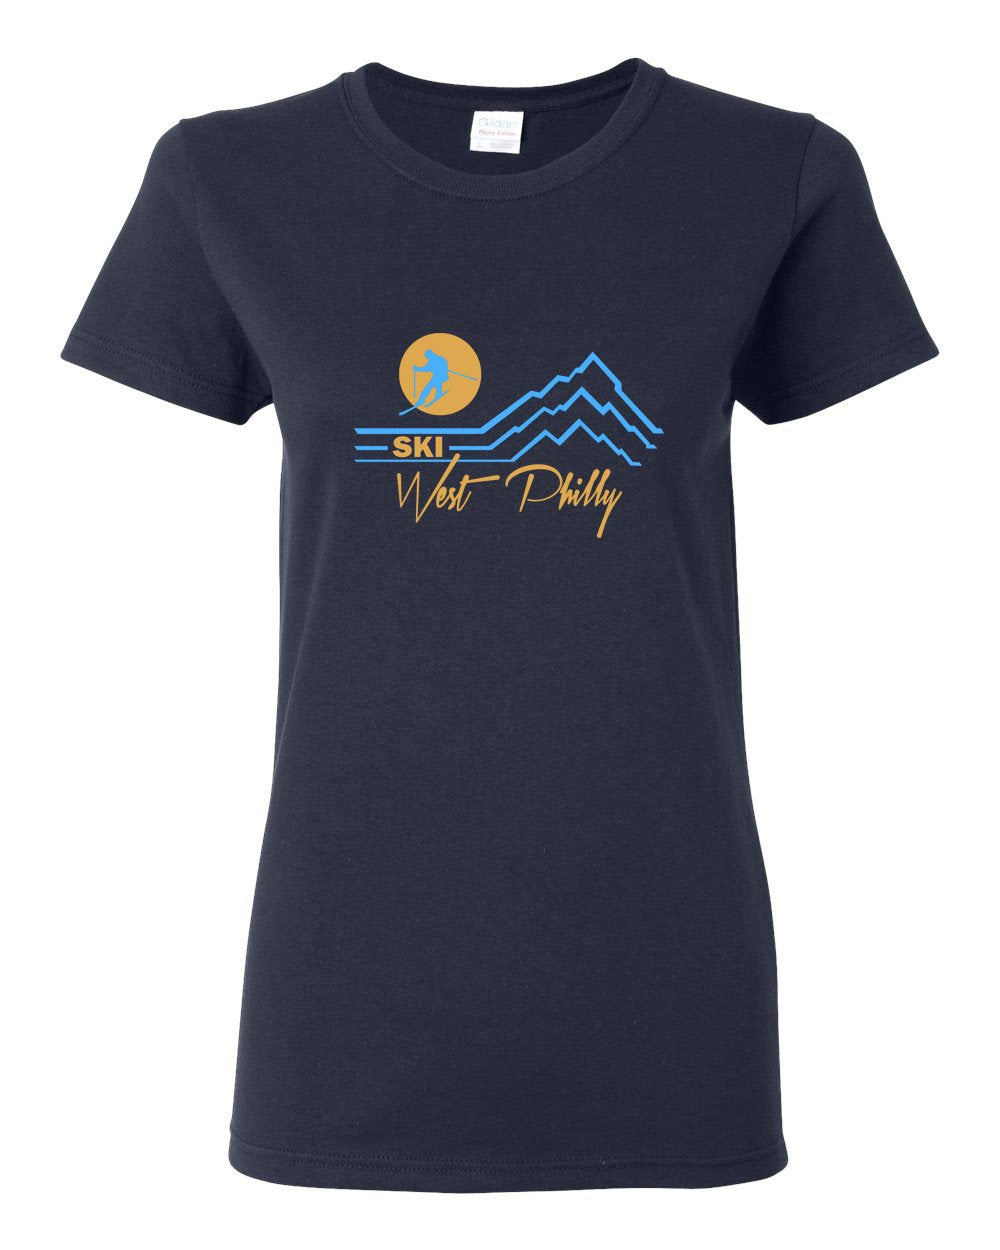 Ski West Philly LADIES Missy-Fit T-Shirt